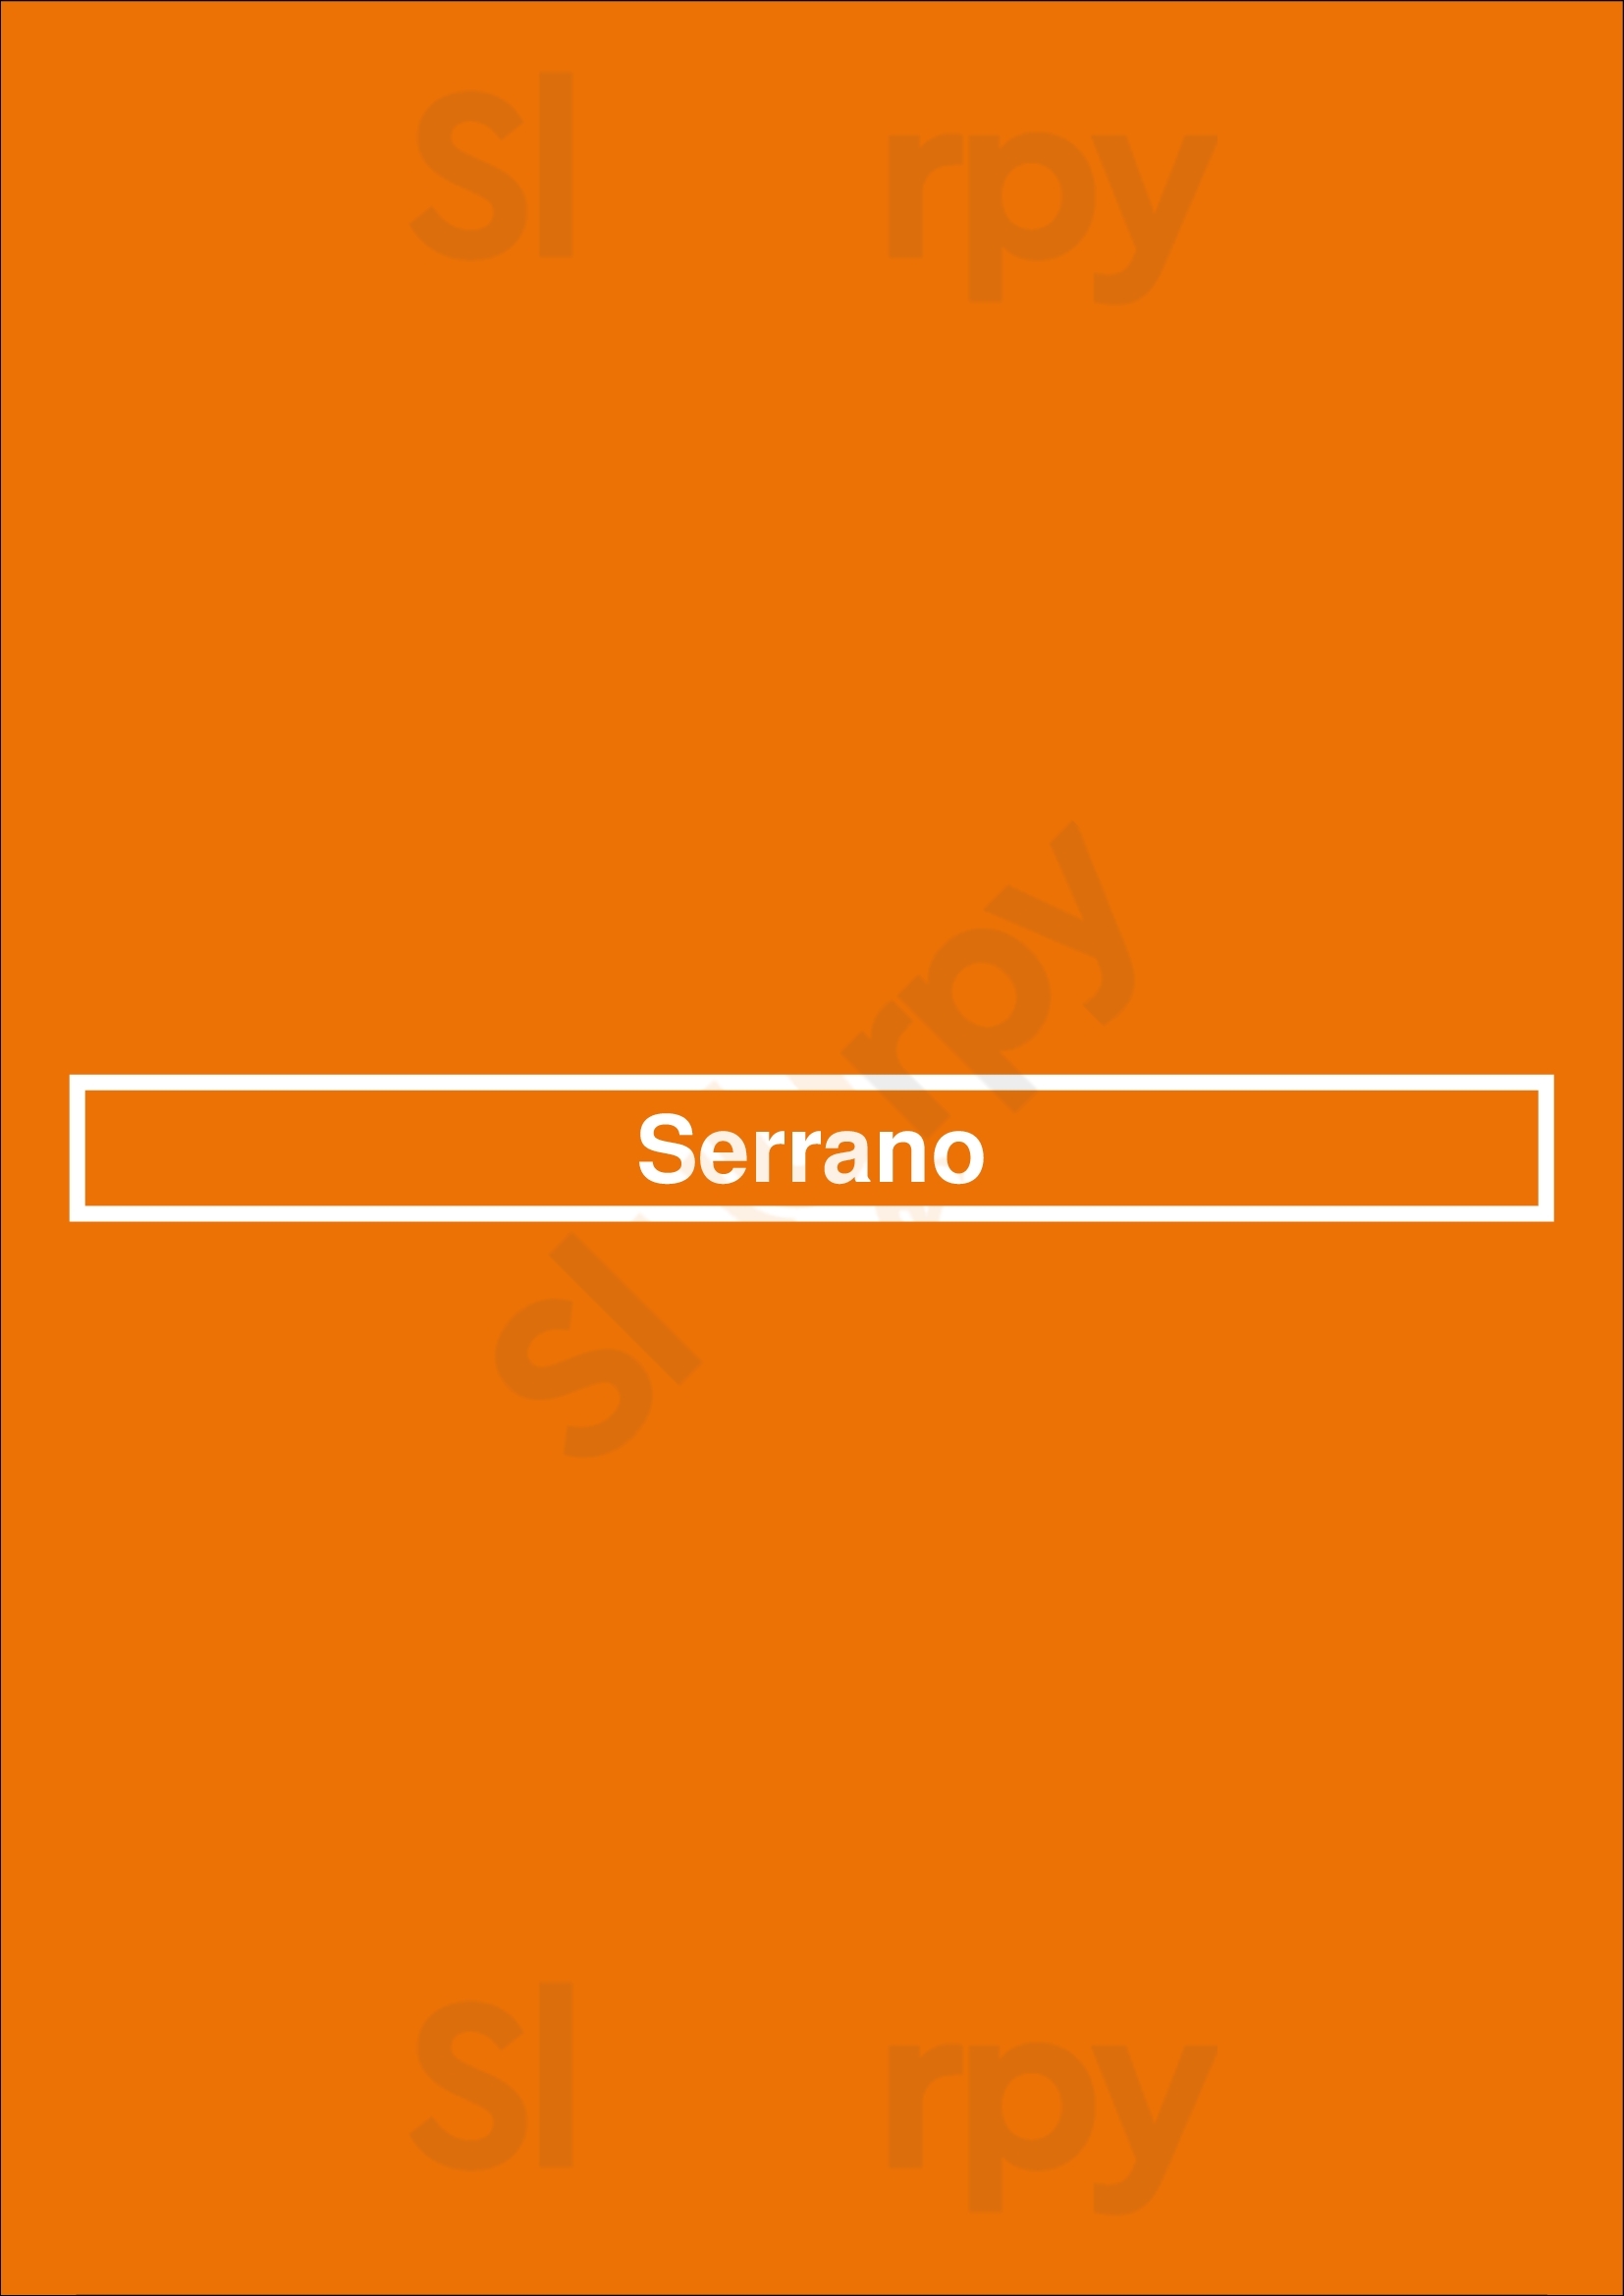 Serrano Fuenlabrada Menu - 1